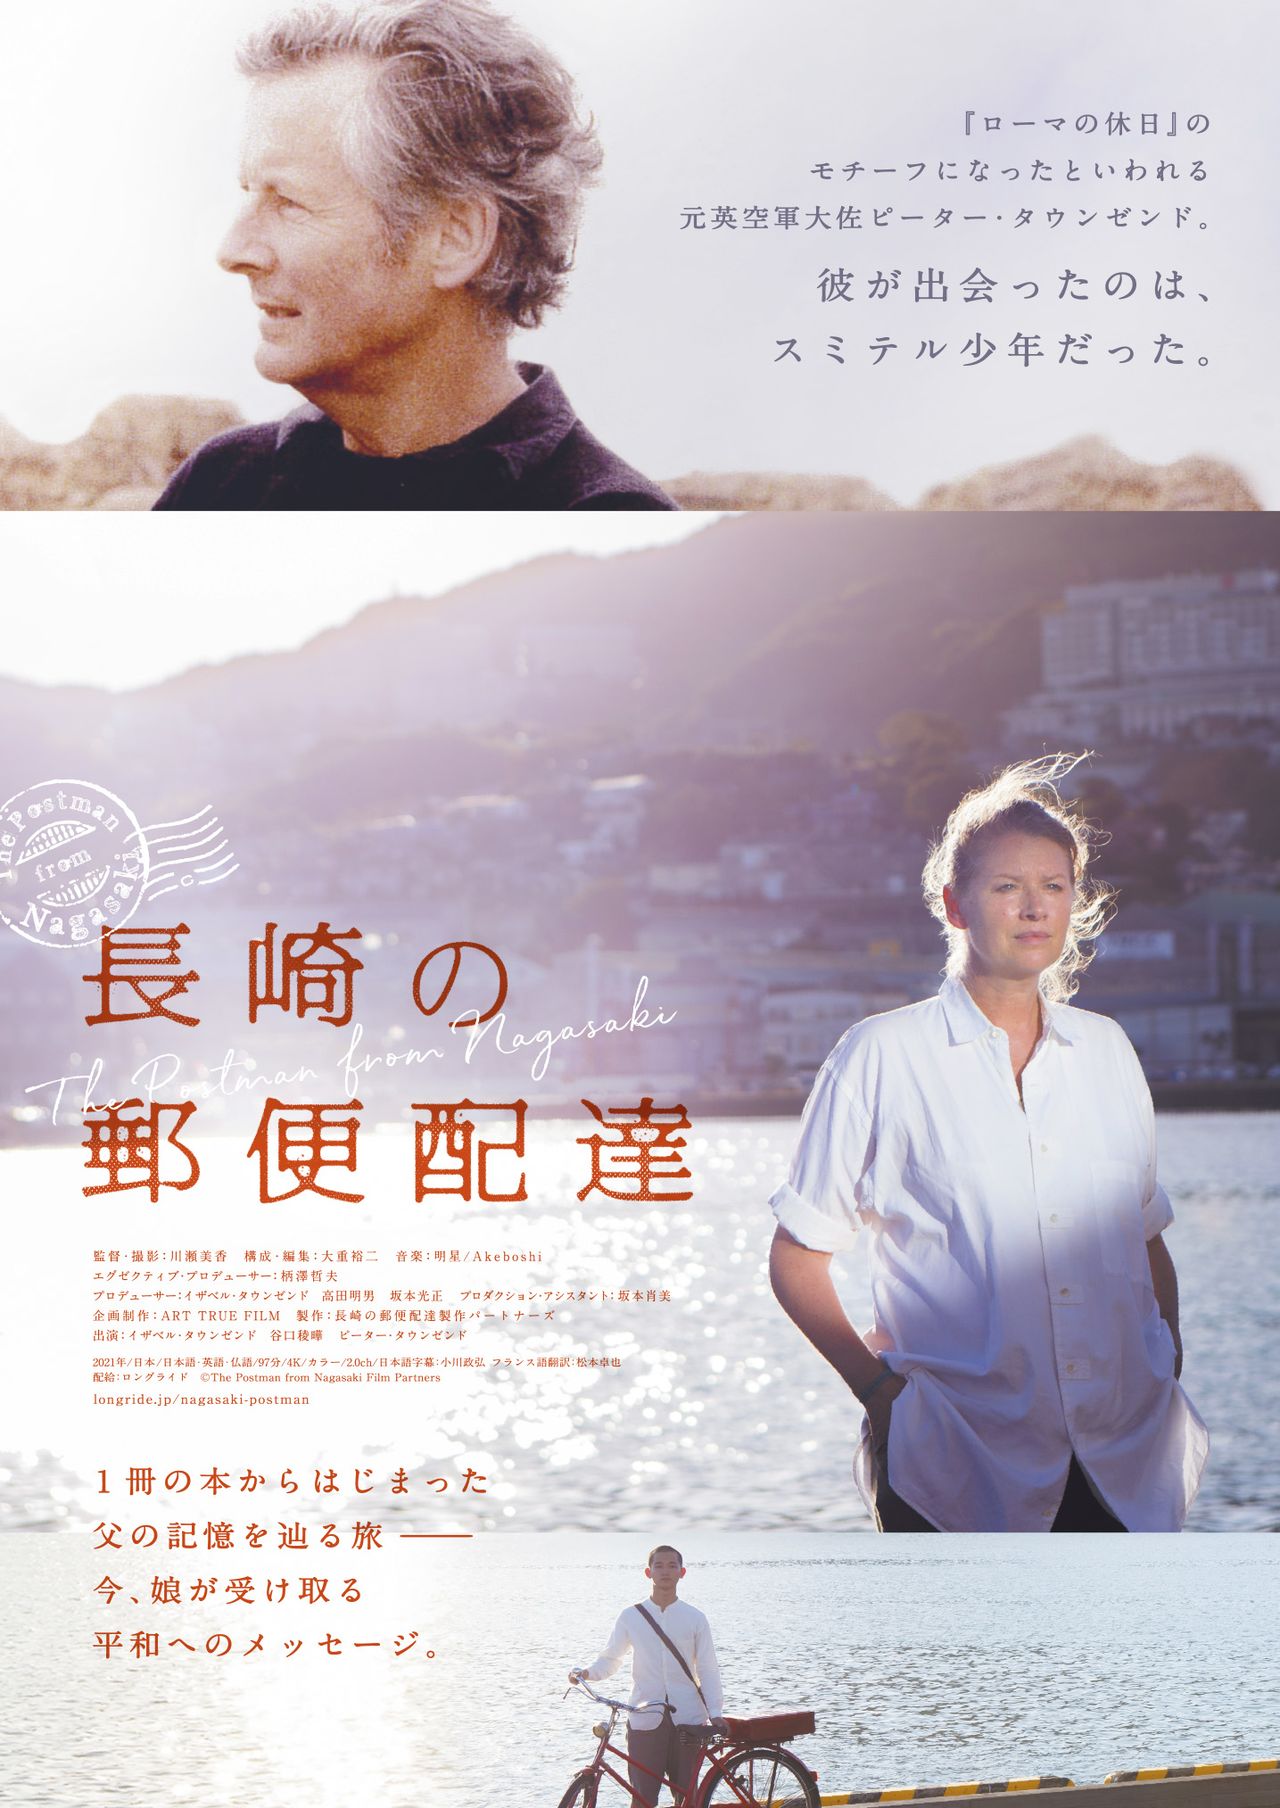 ©︎The Postman from Nagasaki Film Partners